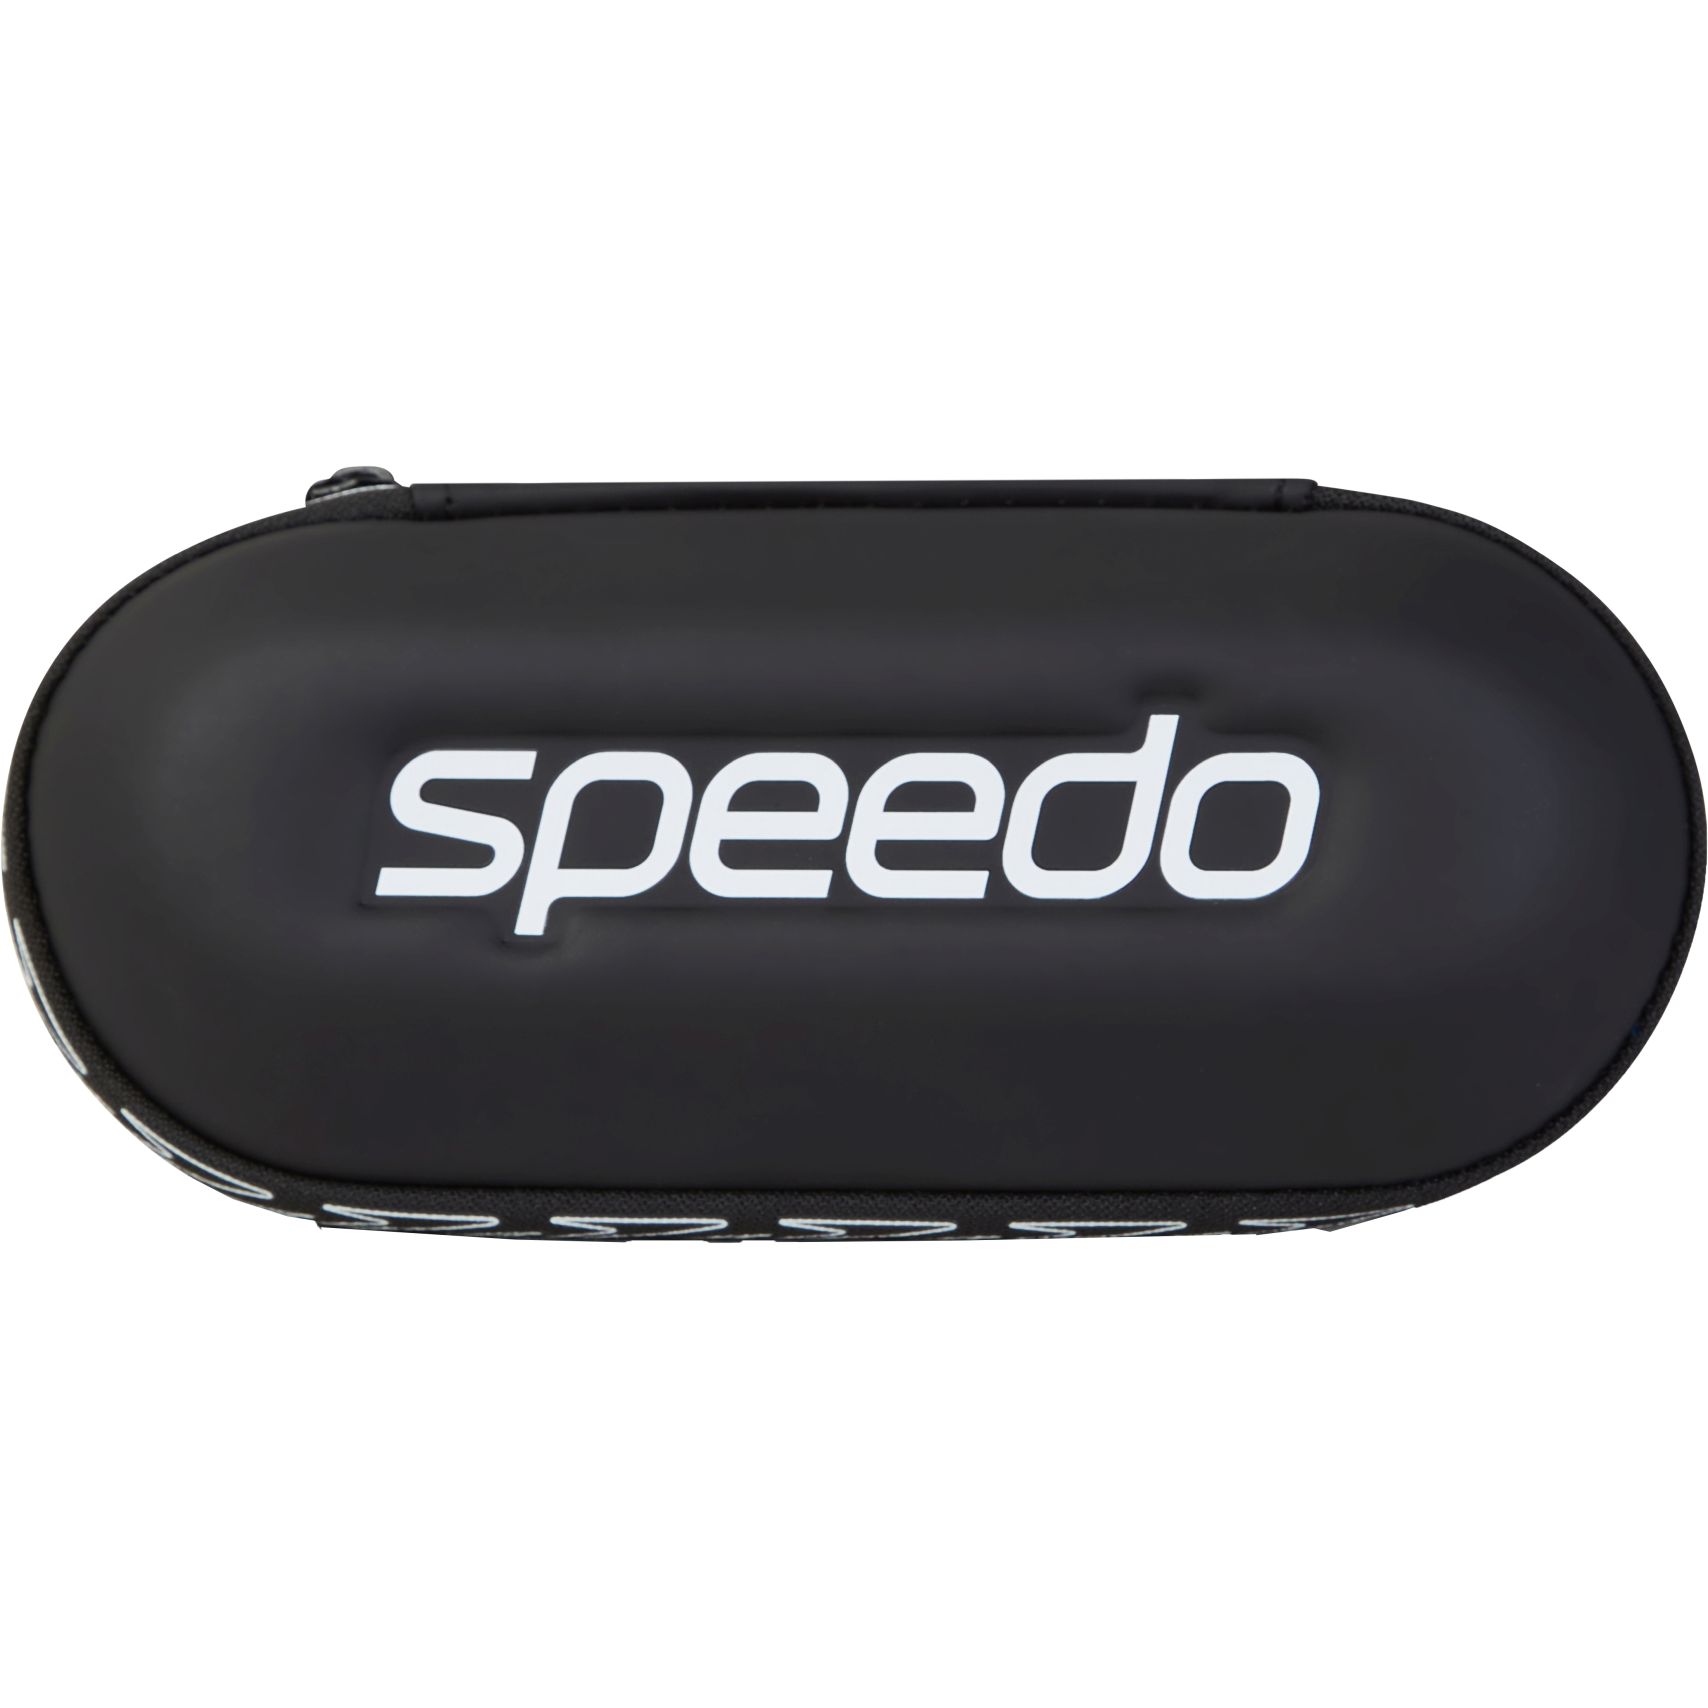 Picture of Speedo Goggles Storage - black